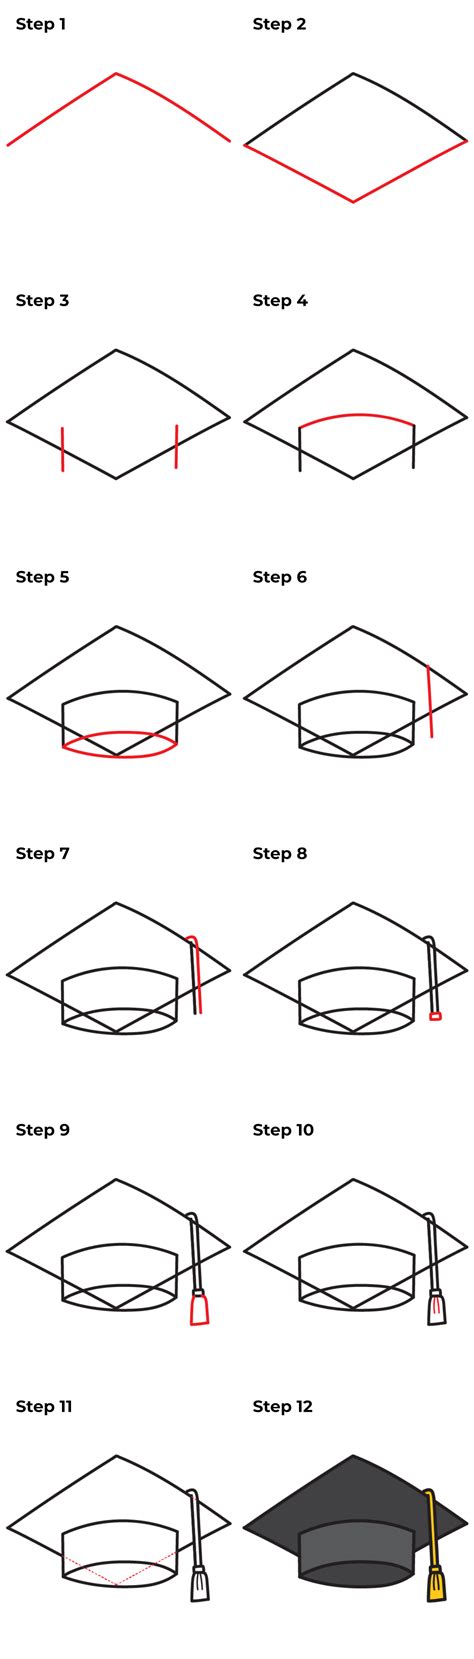 How To Draw A Graduation Cap